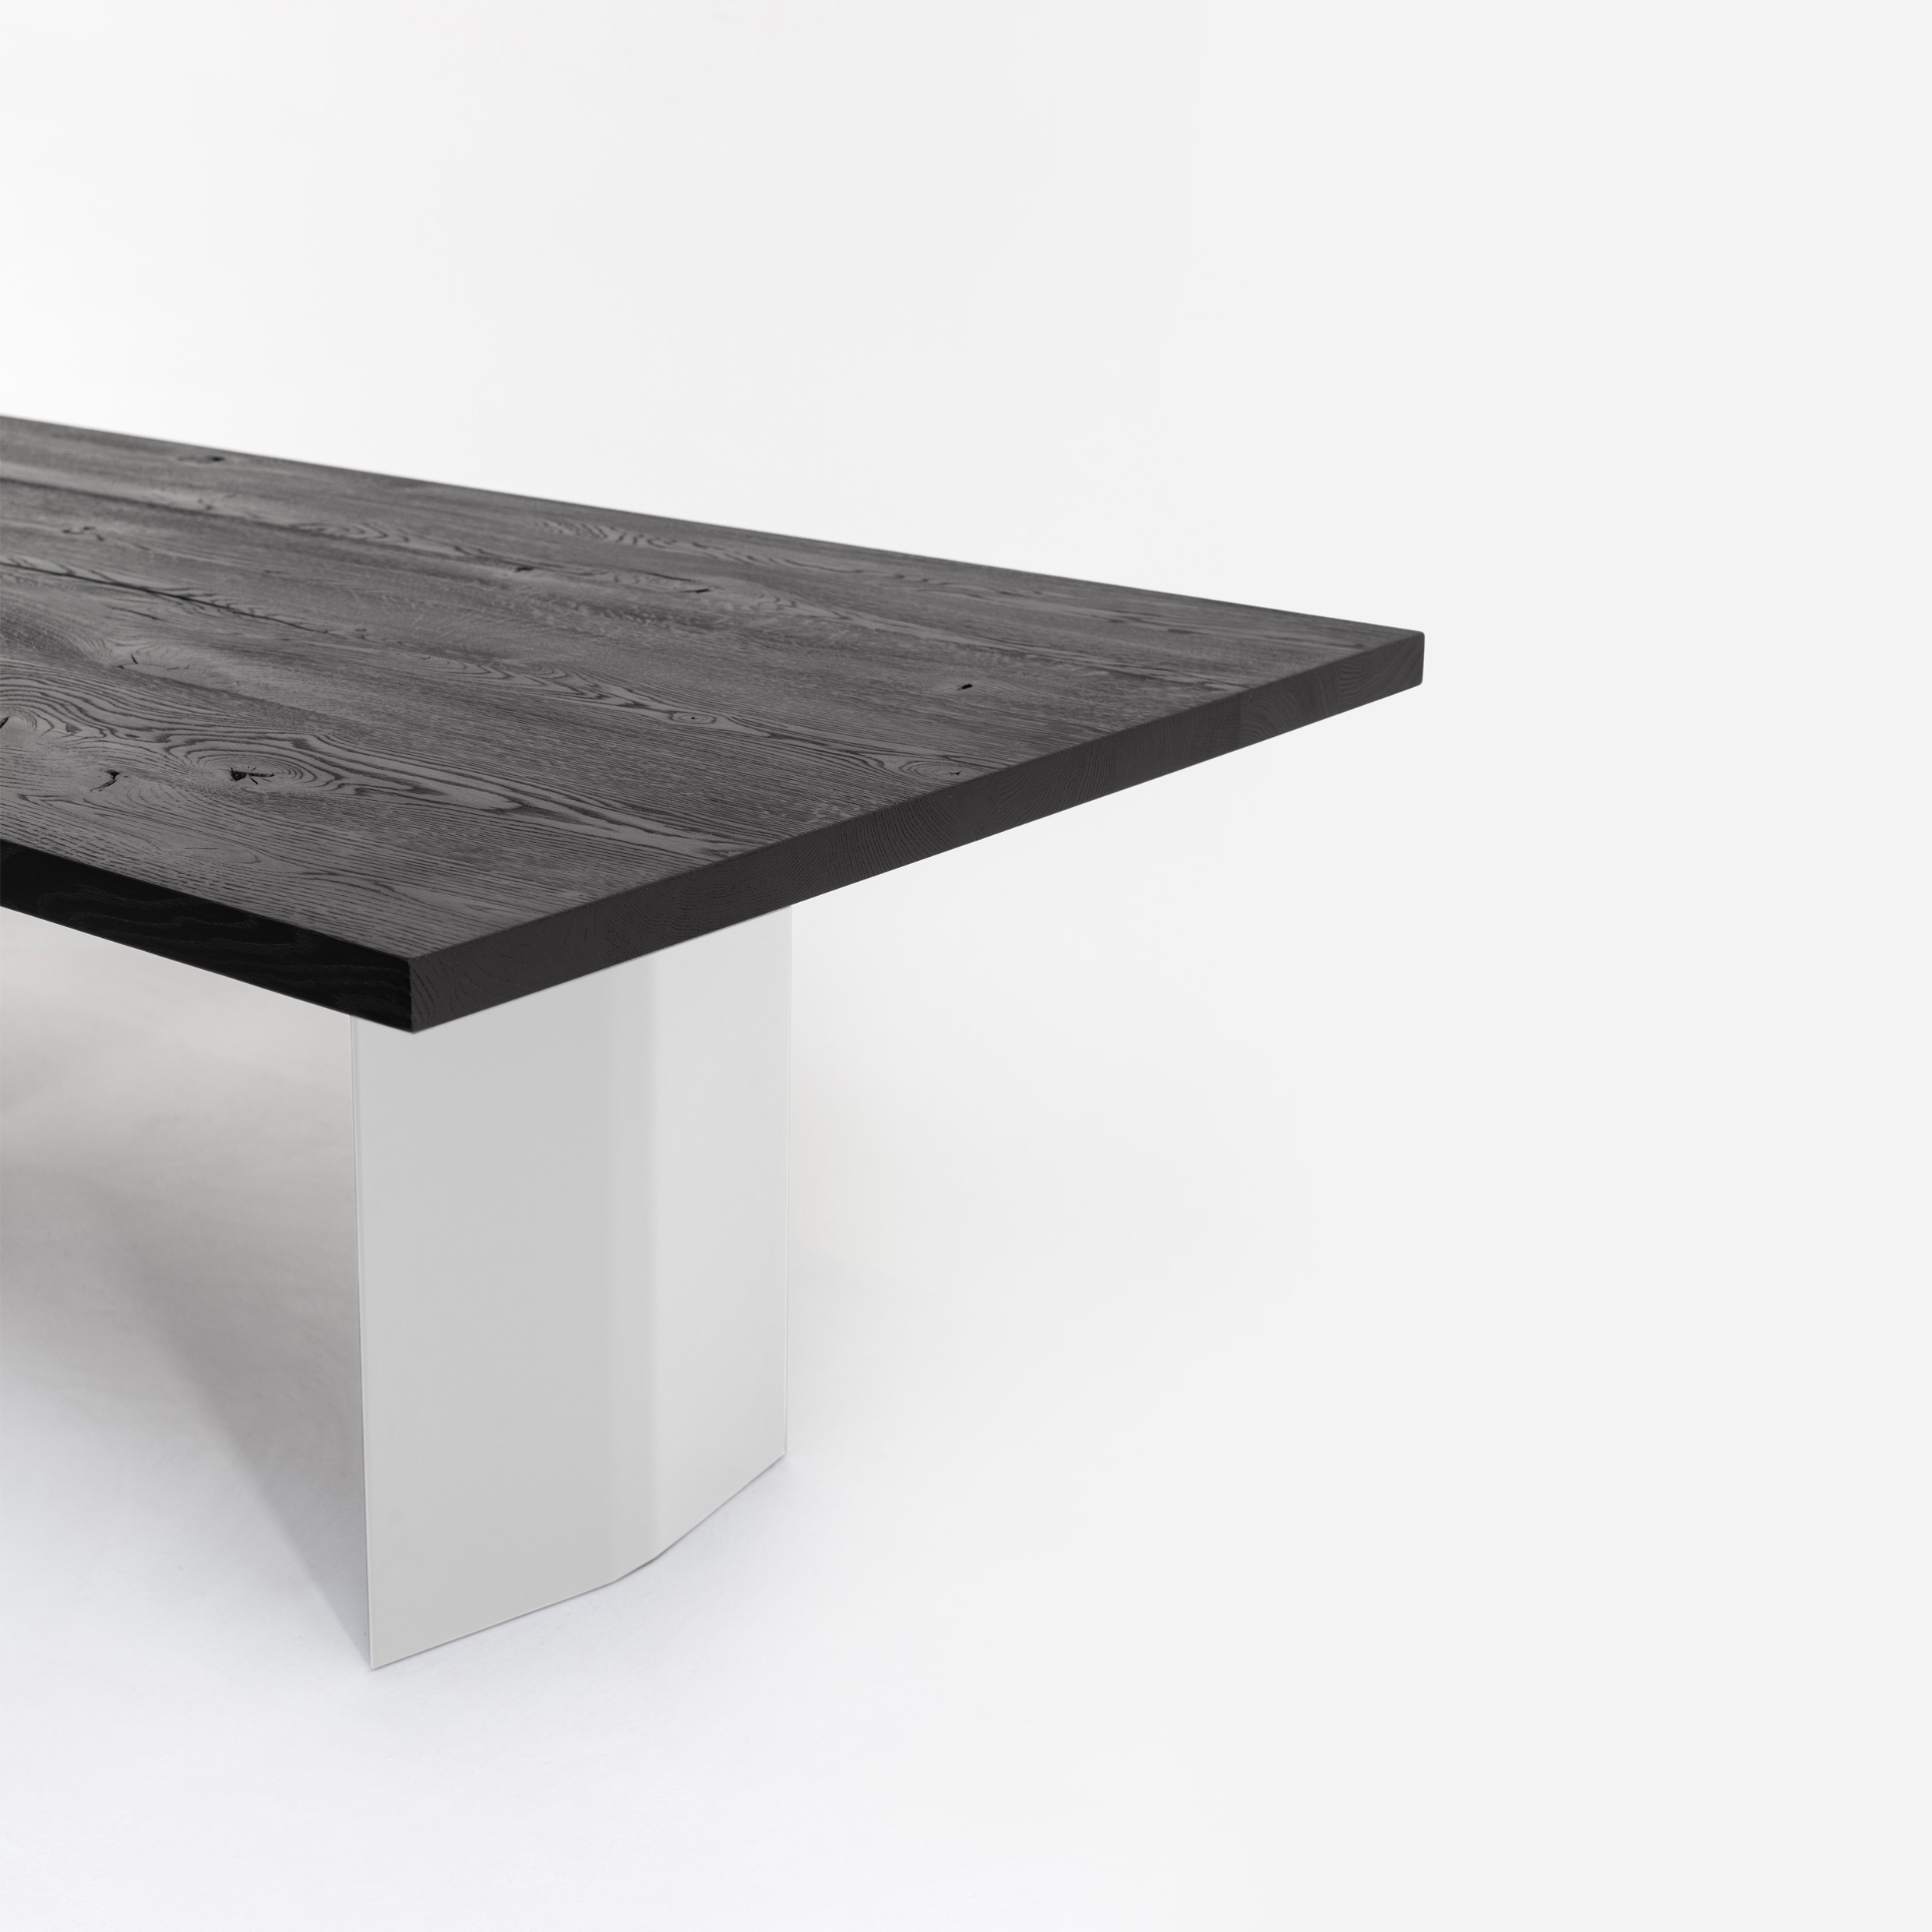 FORM EXCLUSIVE // FYNN - DINING TABLE | GERMAN OAK | BLACK CARED - 180CM X 90CM X 4CM - SINGLE WHITE